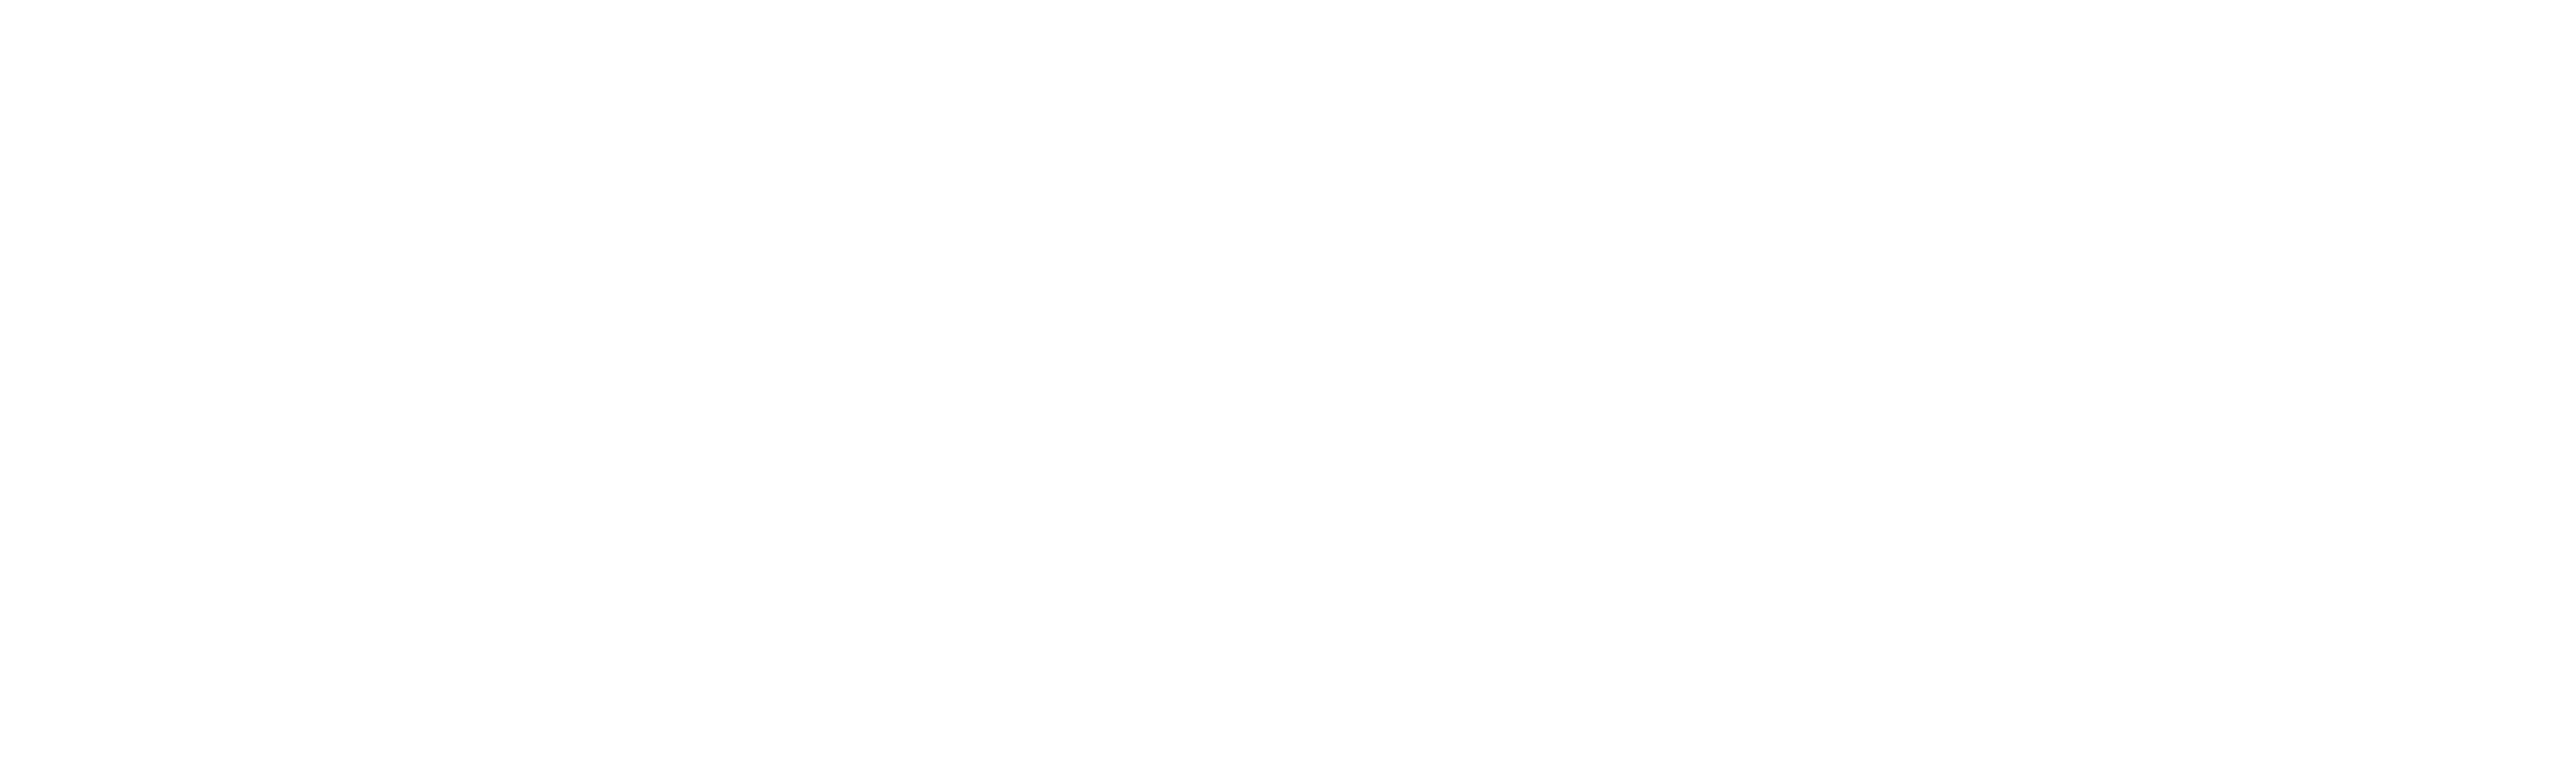 KC Investor Funding